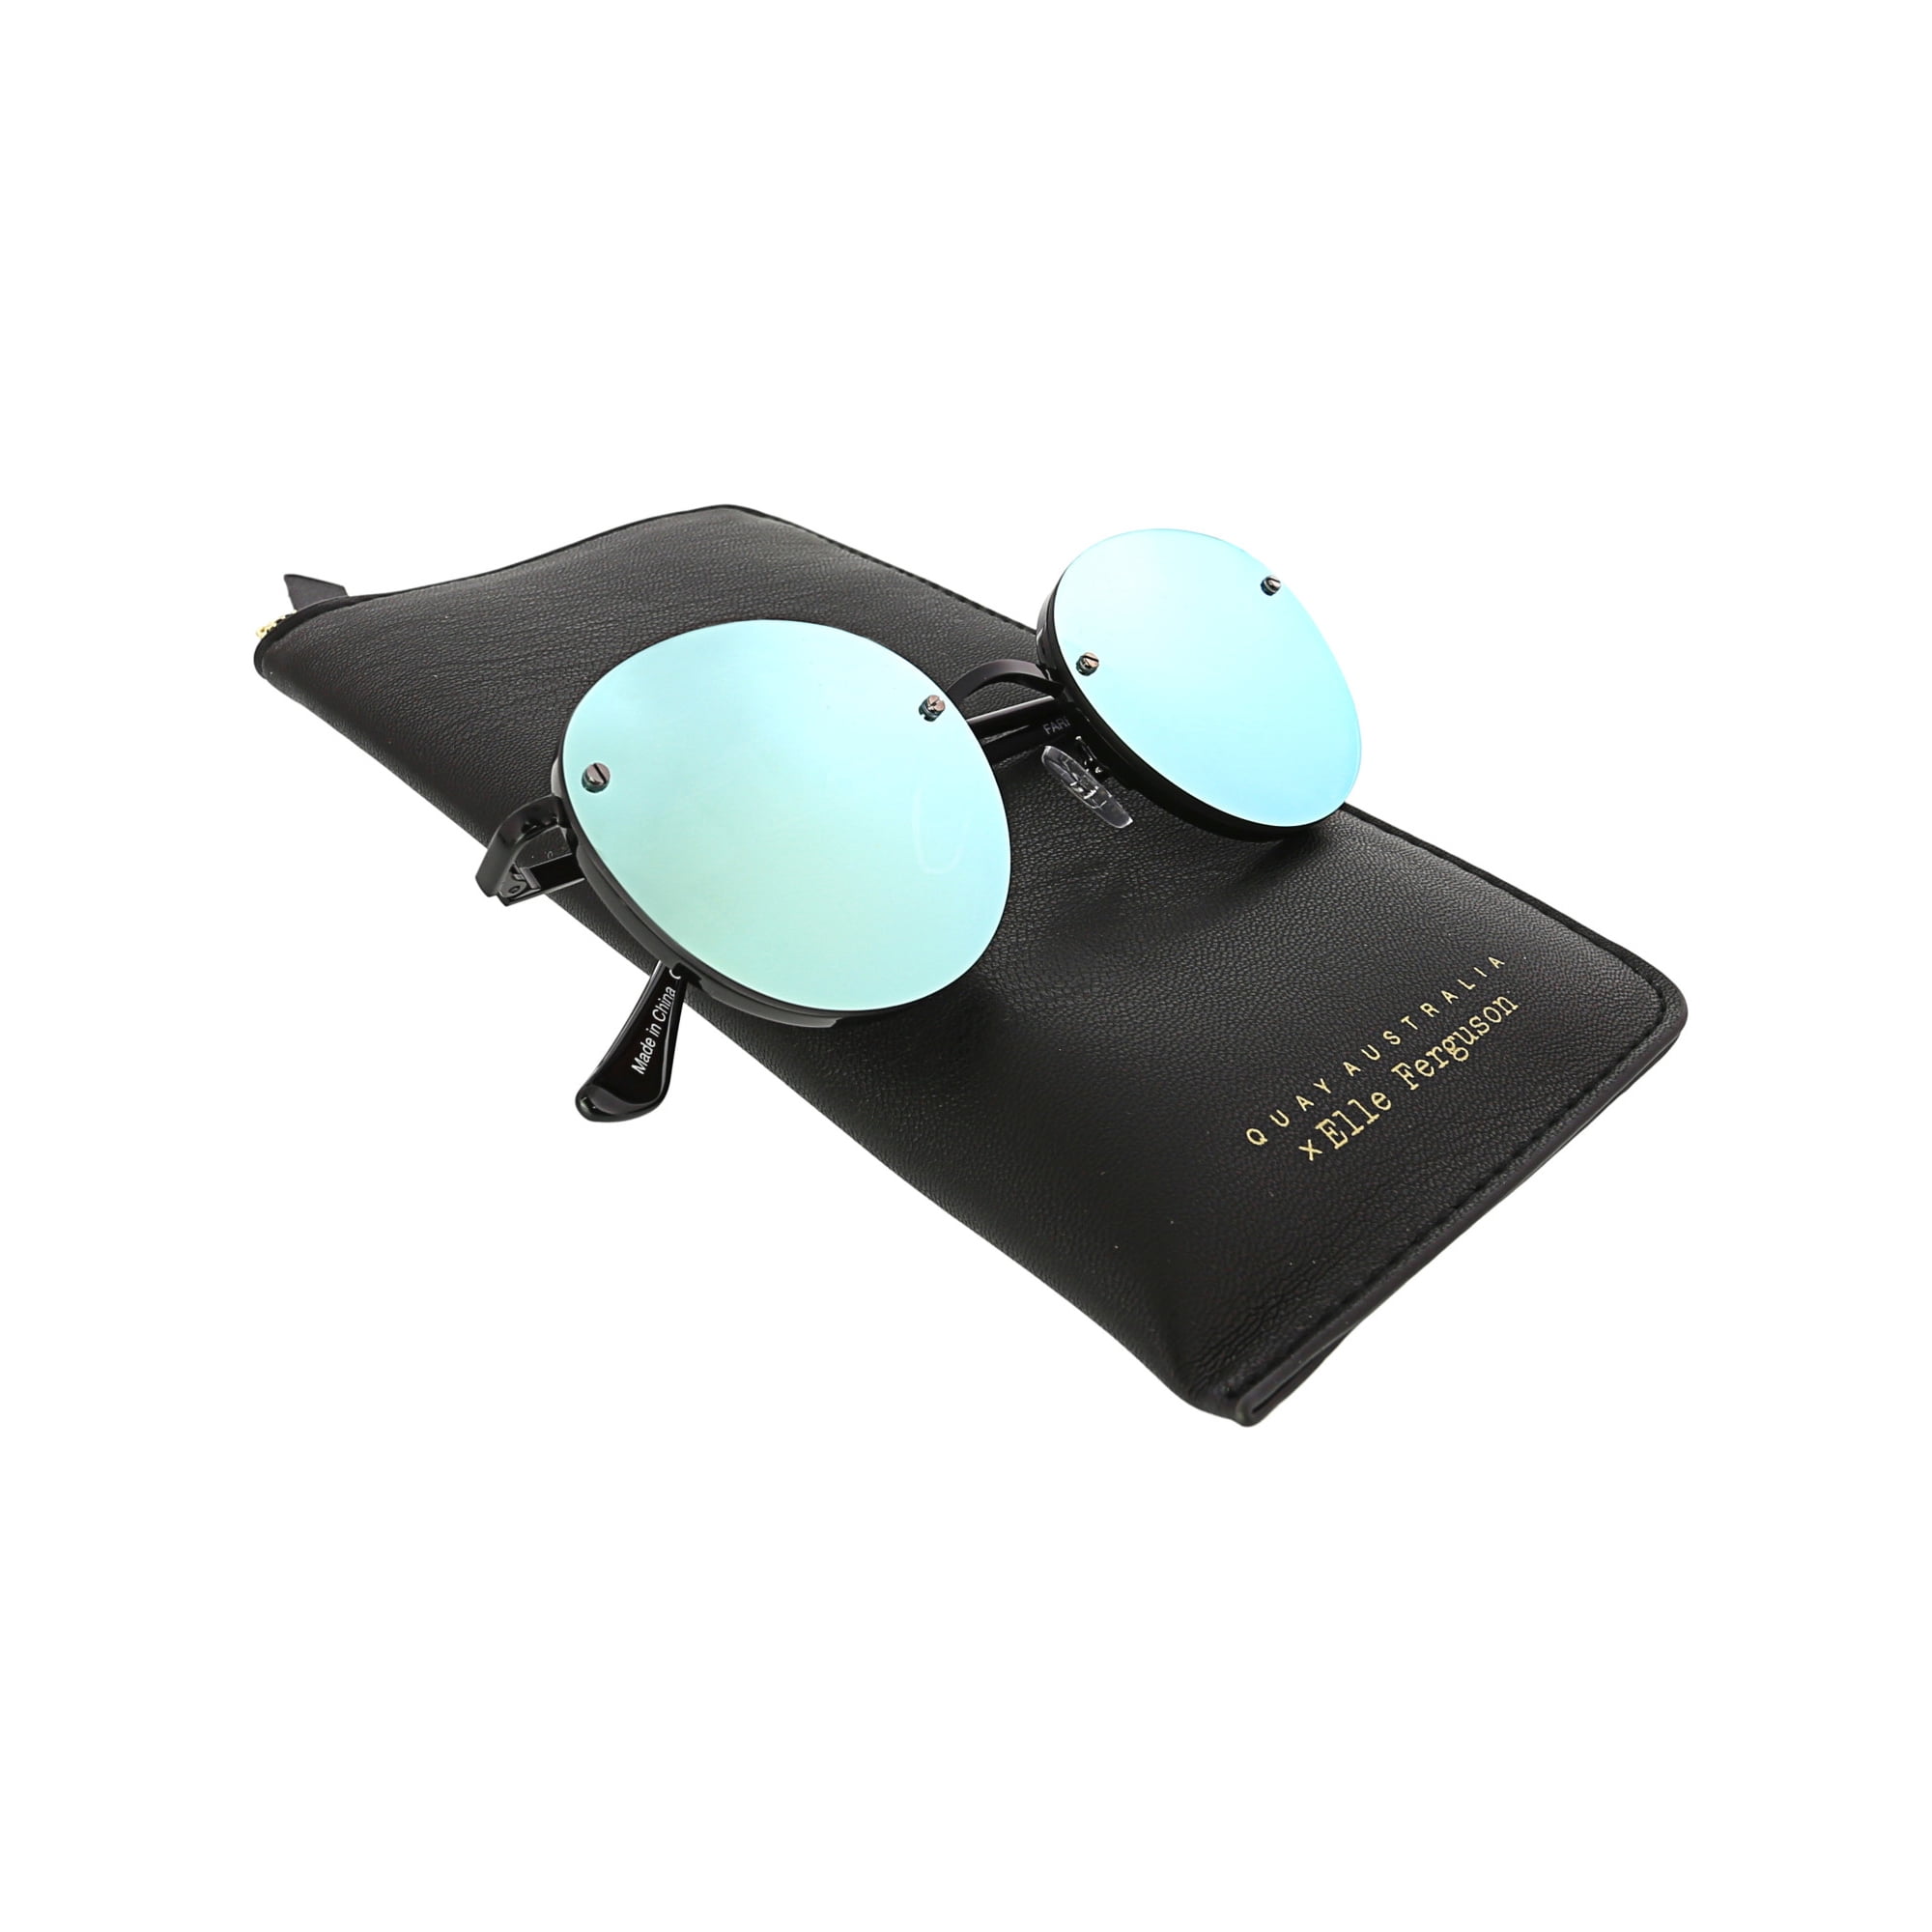 Čip magarac prikladan  Quay Women's Mirrored Farrah QW-000399-BLK/MINT Black Oval Sunglasses |  Walmart Canada